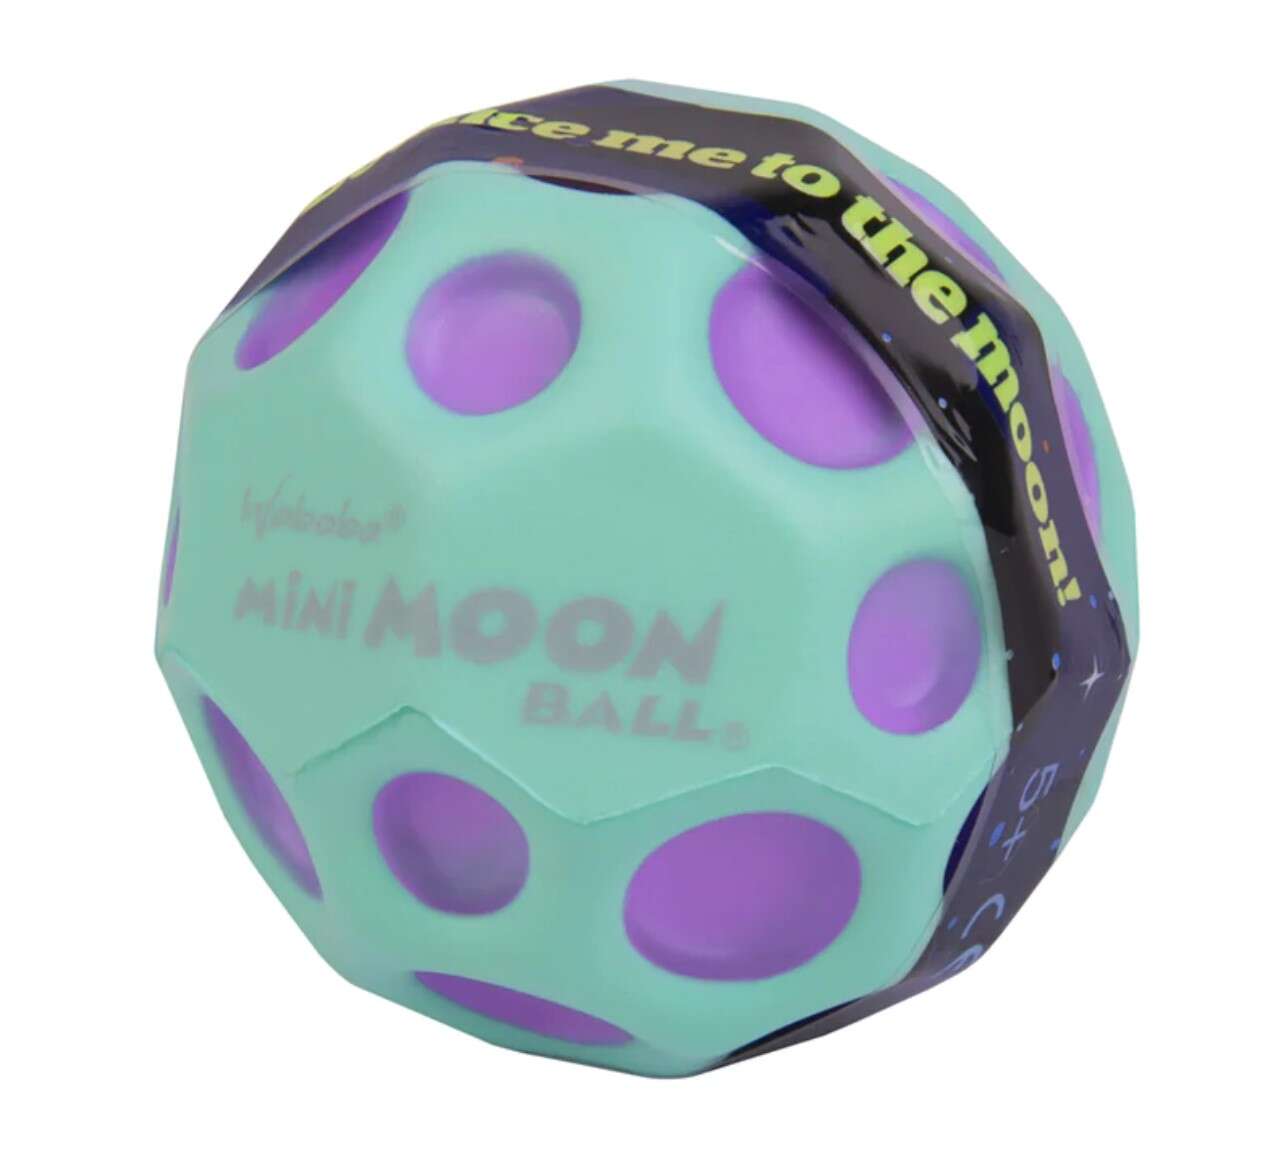 Mini minge hiper saritoare - Mini Moon Ball (mai multe culori) | Waboba